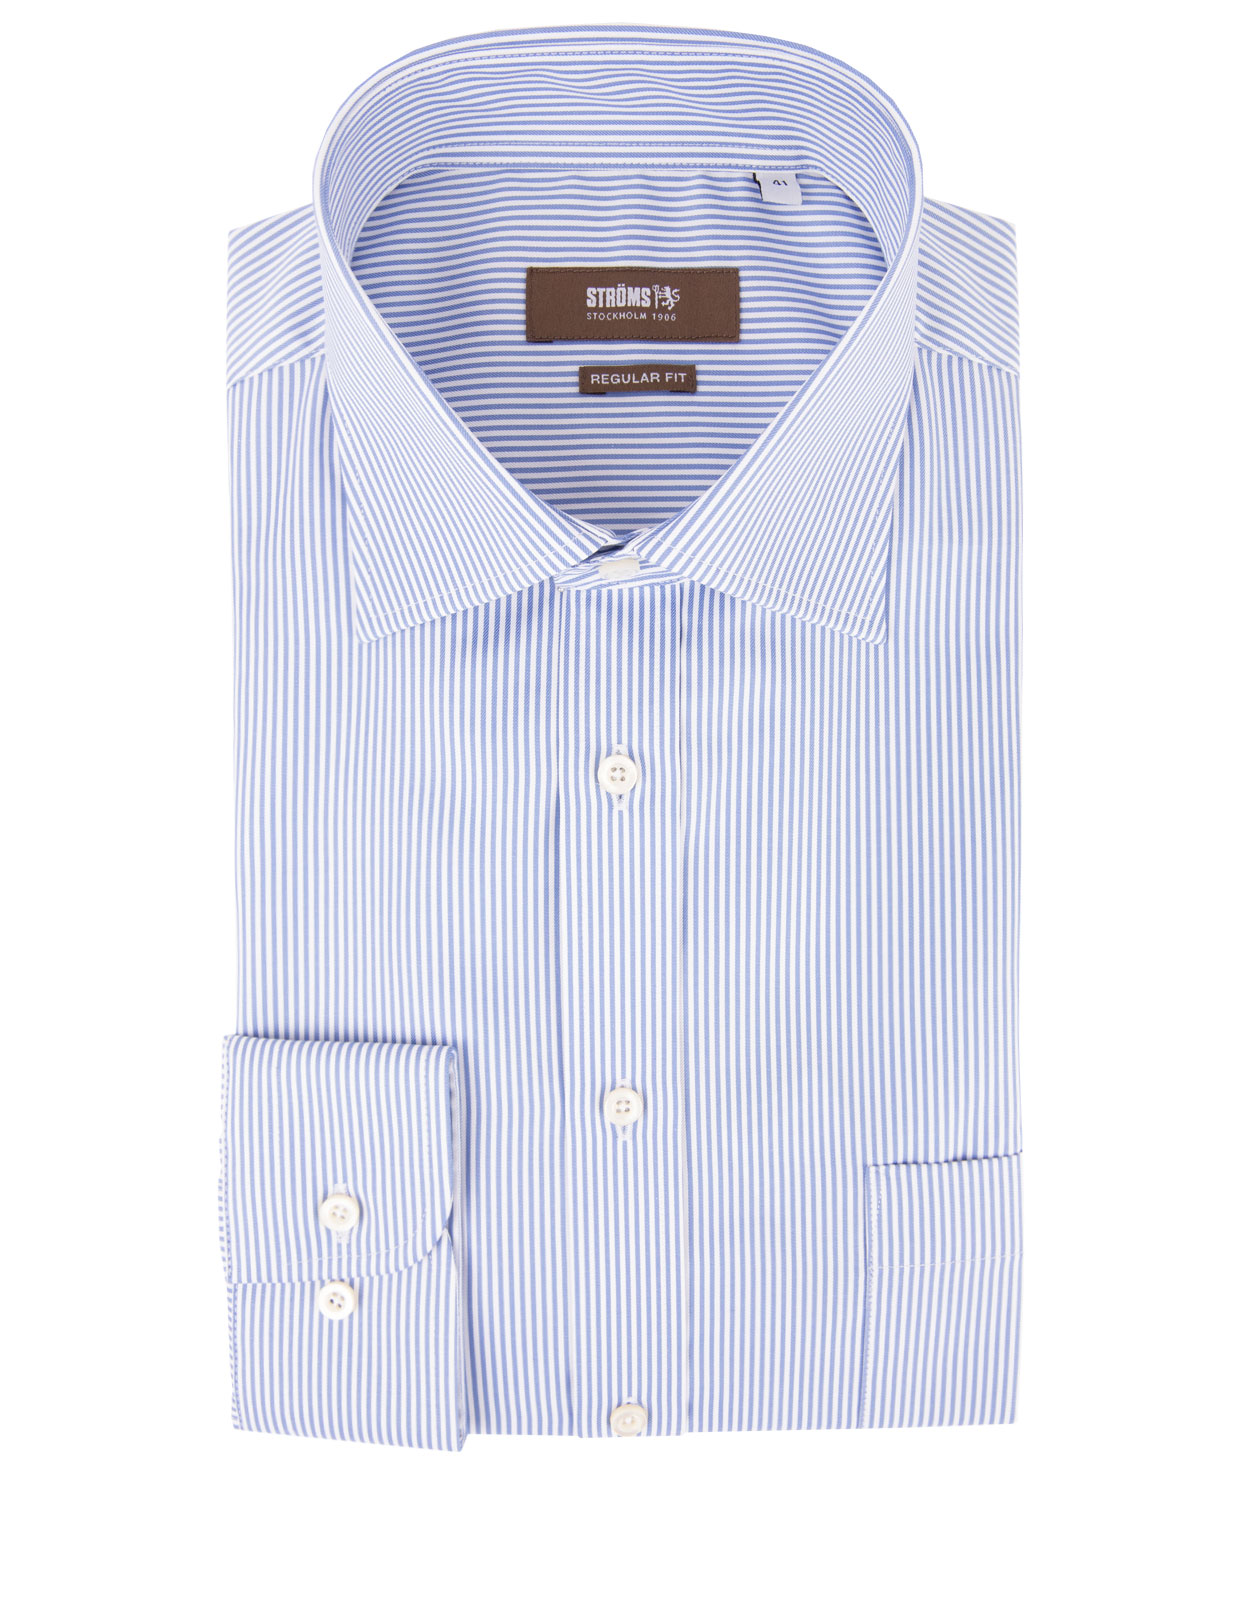 Regular Fit Cotton Shirt Stripe Blue/White